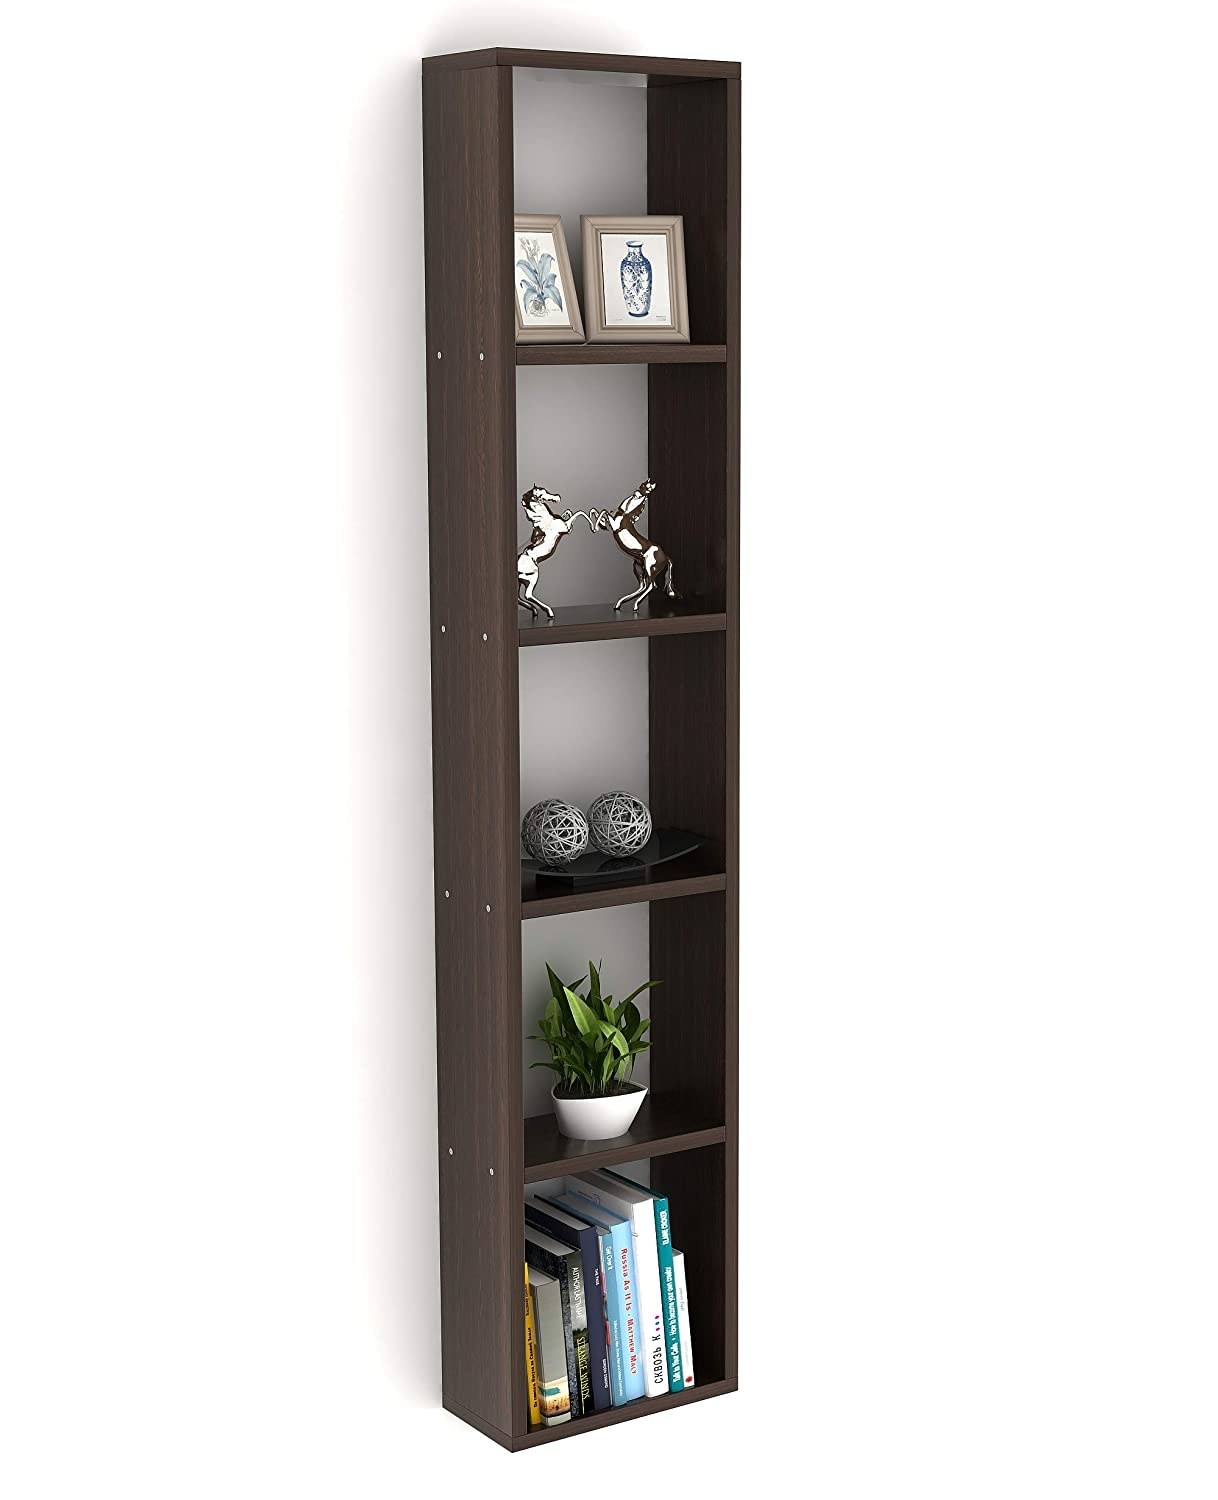 A wall-mounted bookshelf 